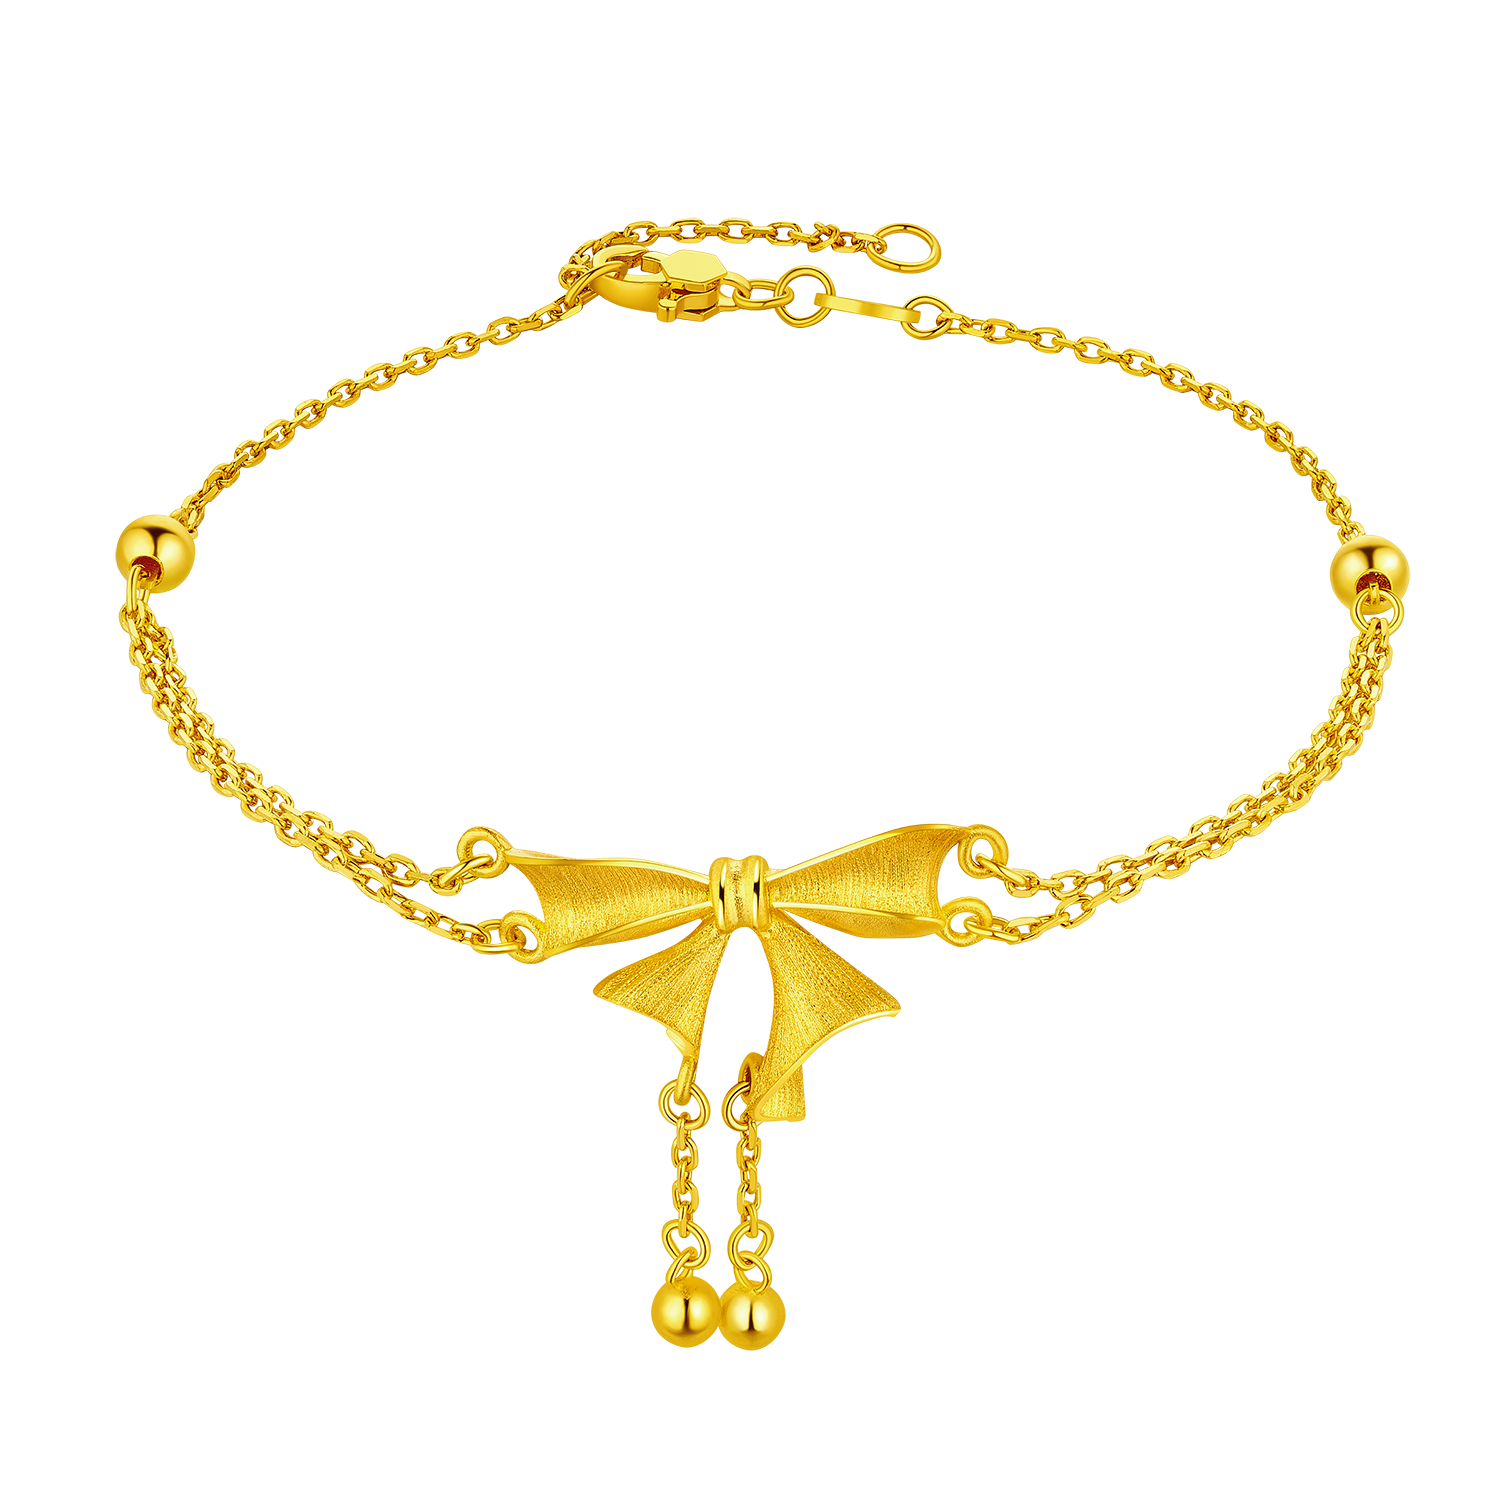 Beloved Collection "Bow of Love" Gold Bracelet 